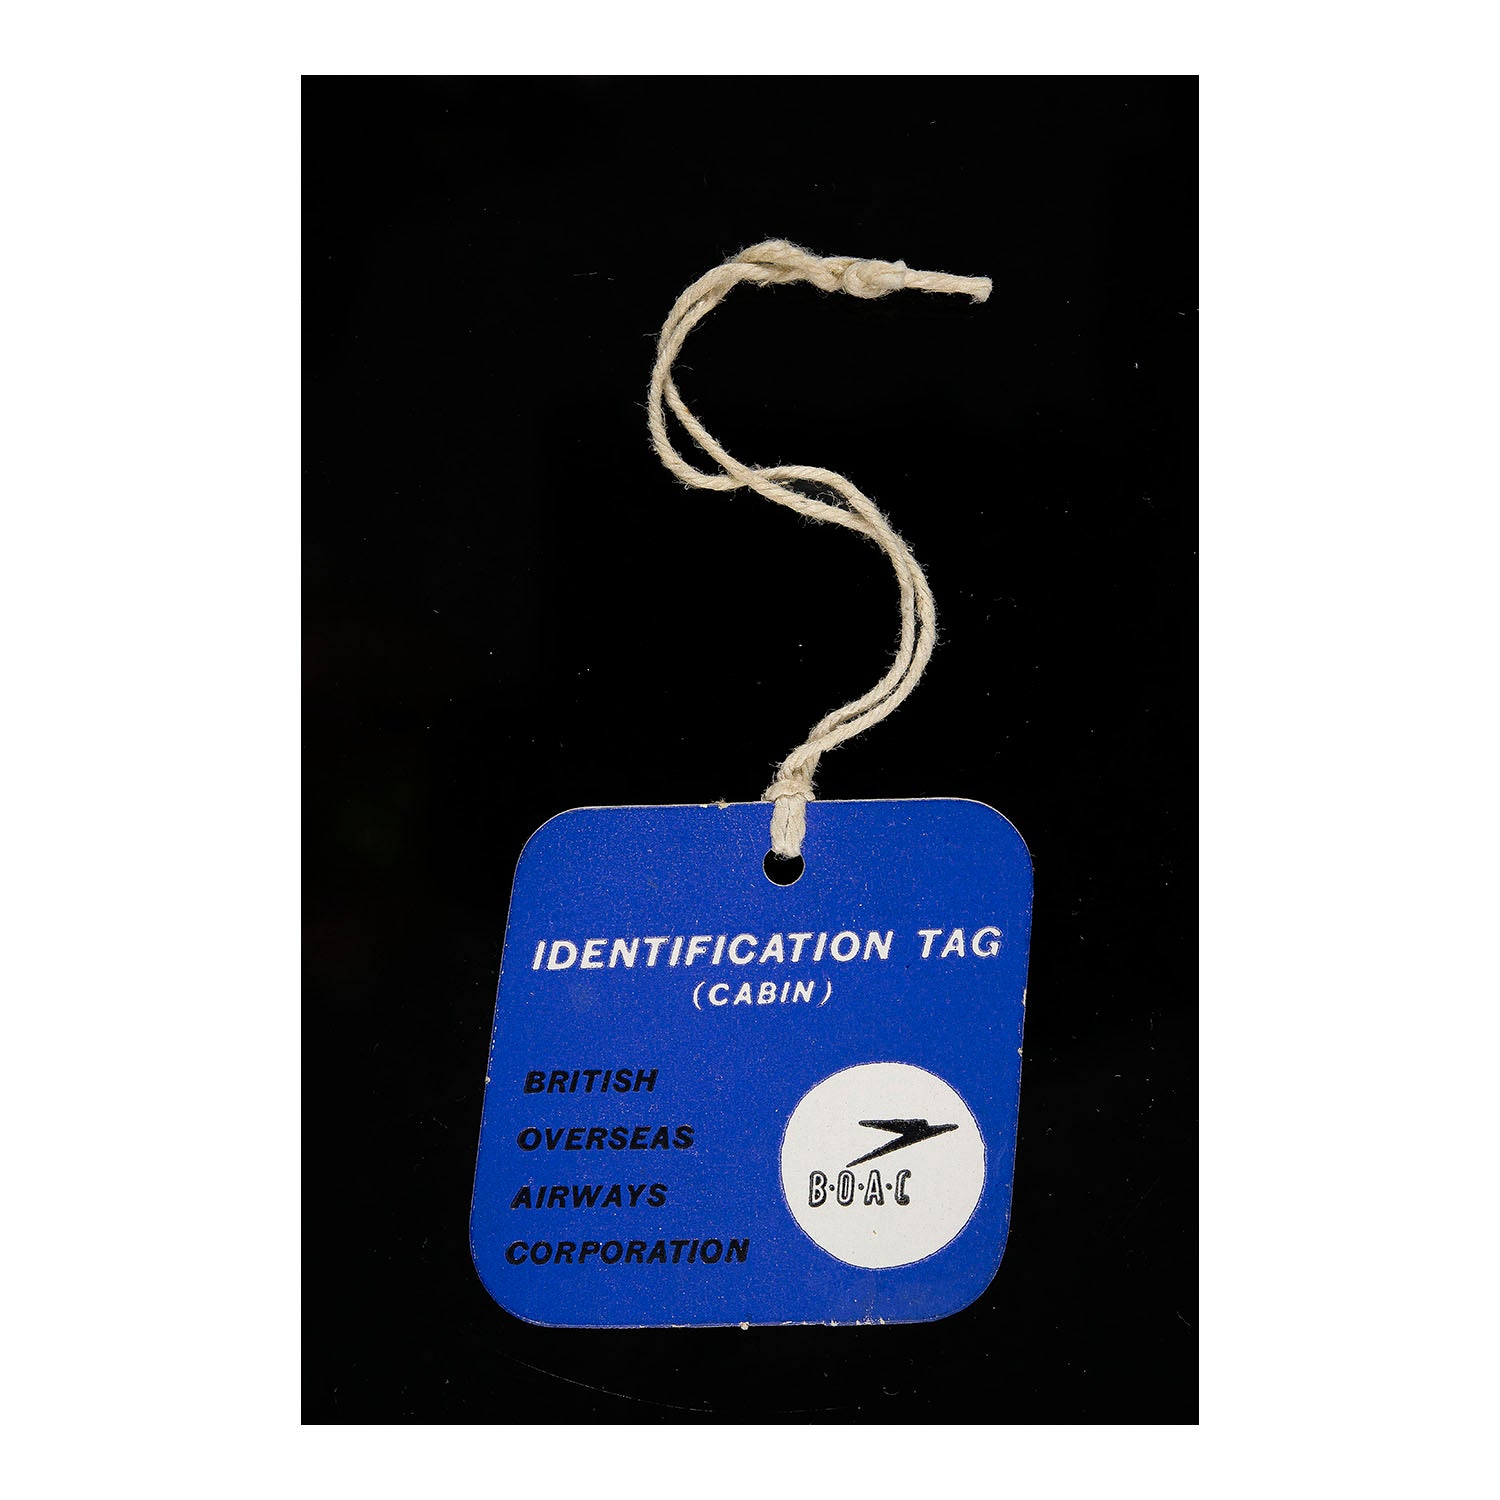 BOAC Luggage Identification (Cabin) tag